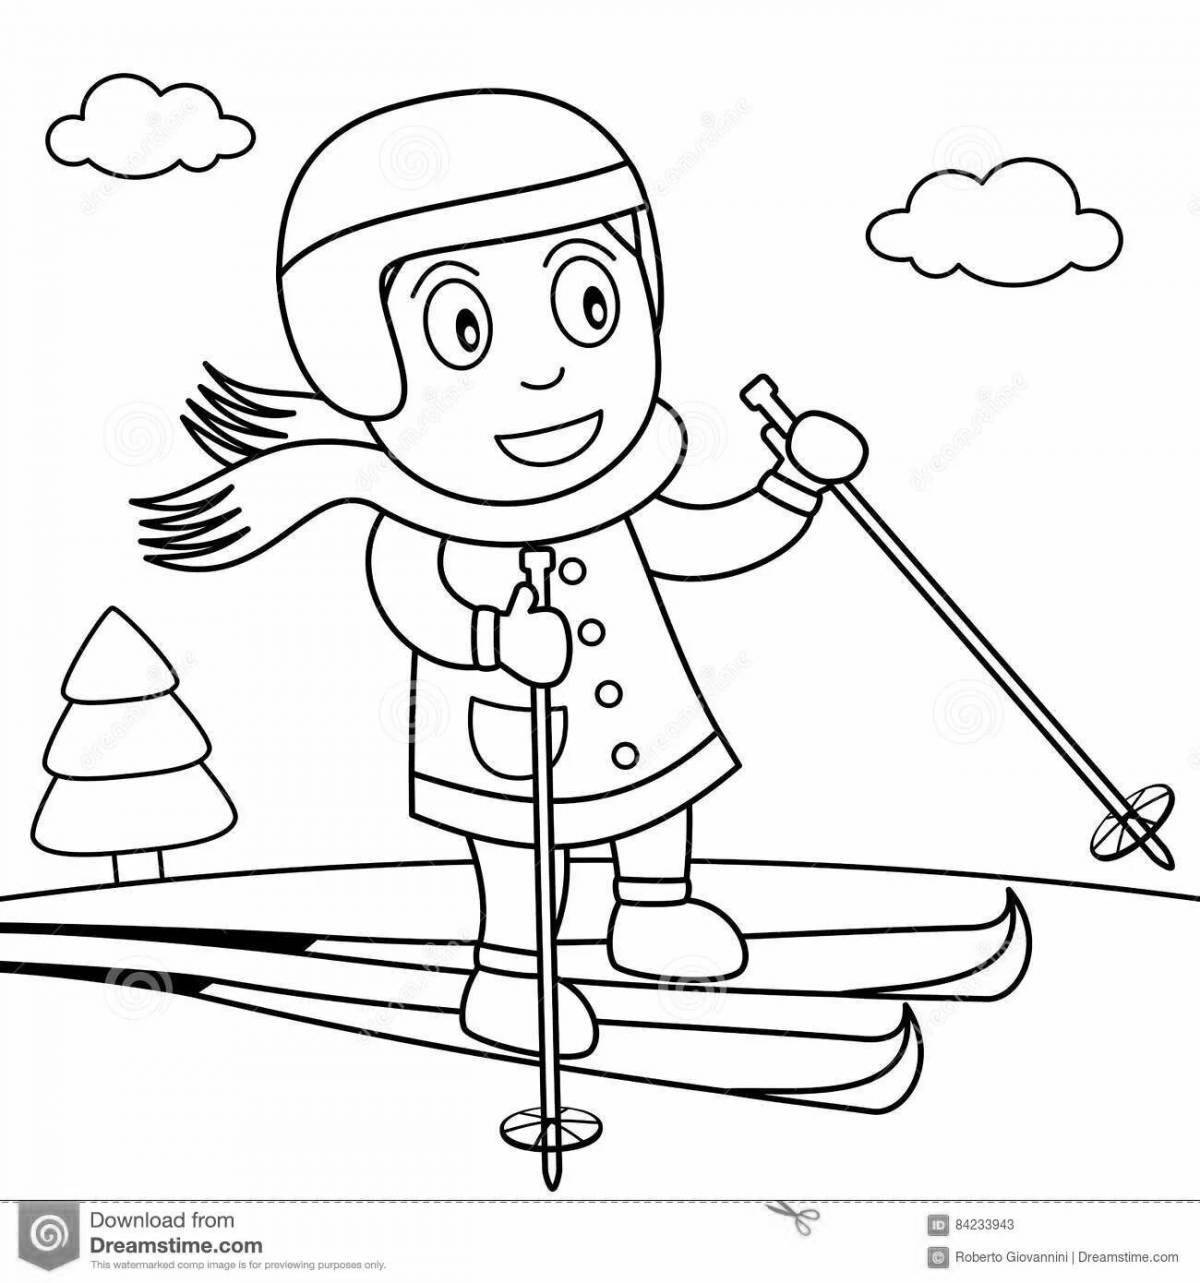 Skier coloring book for preschoolers